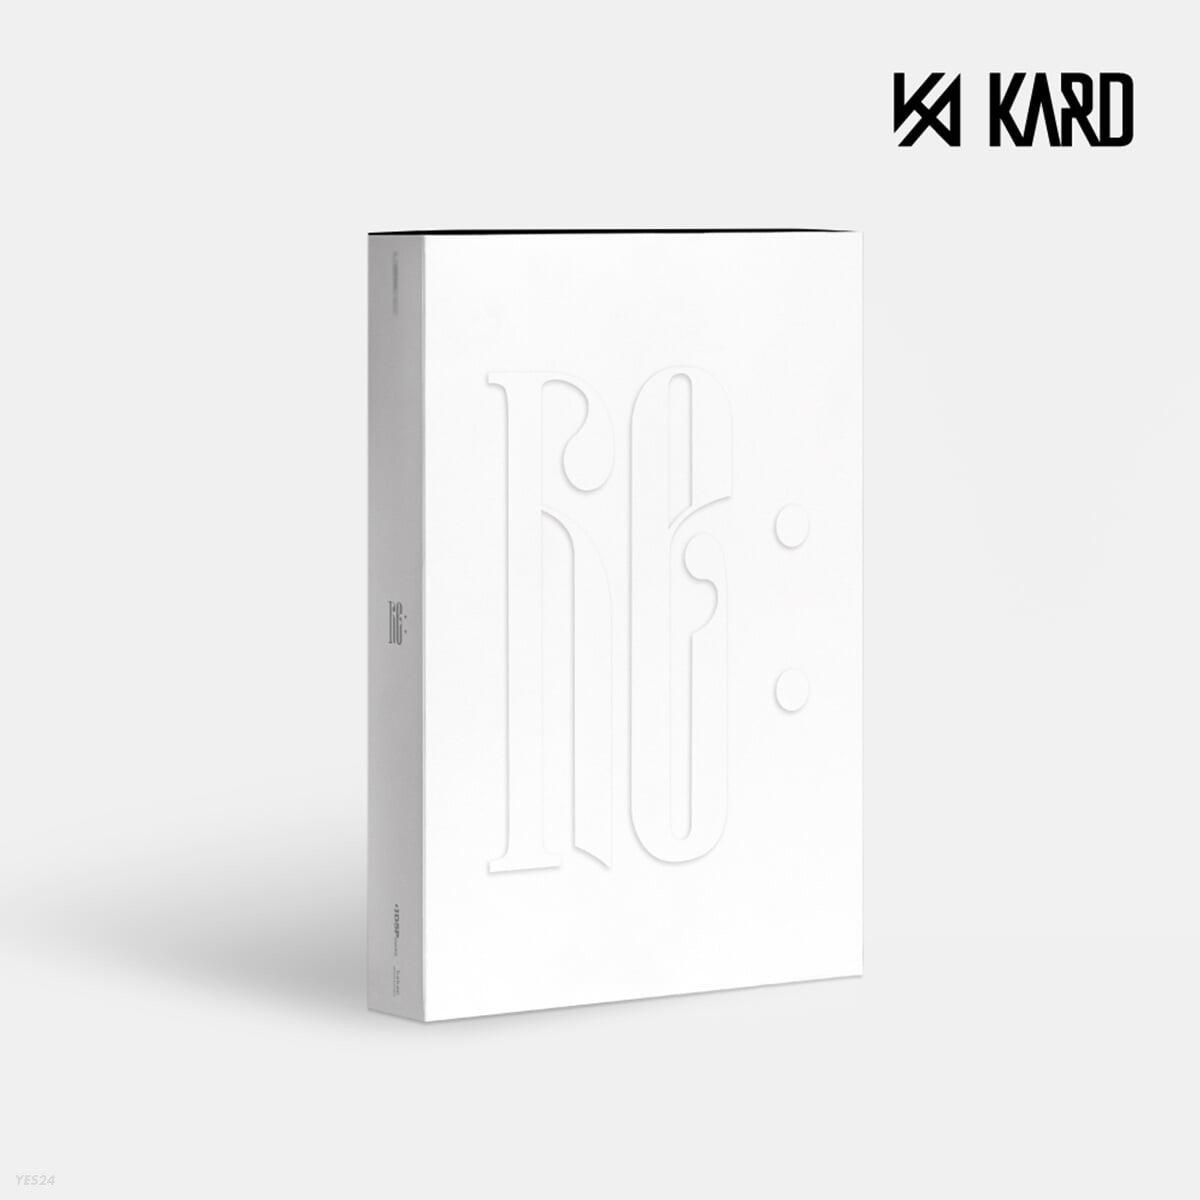 KARD Mini Album Vol. 5 – Re: